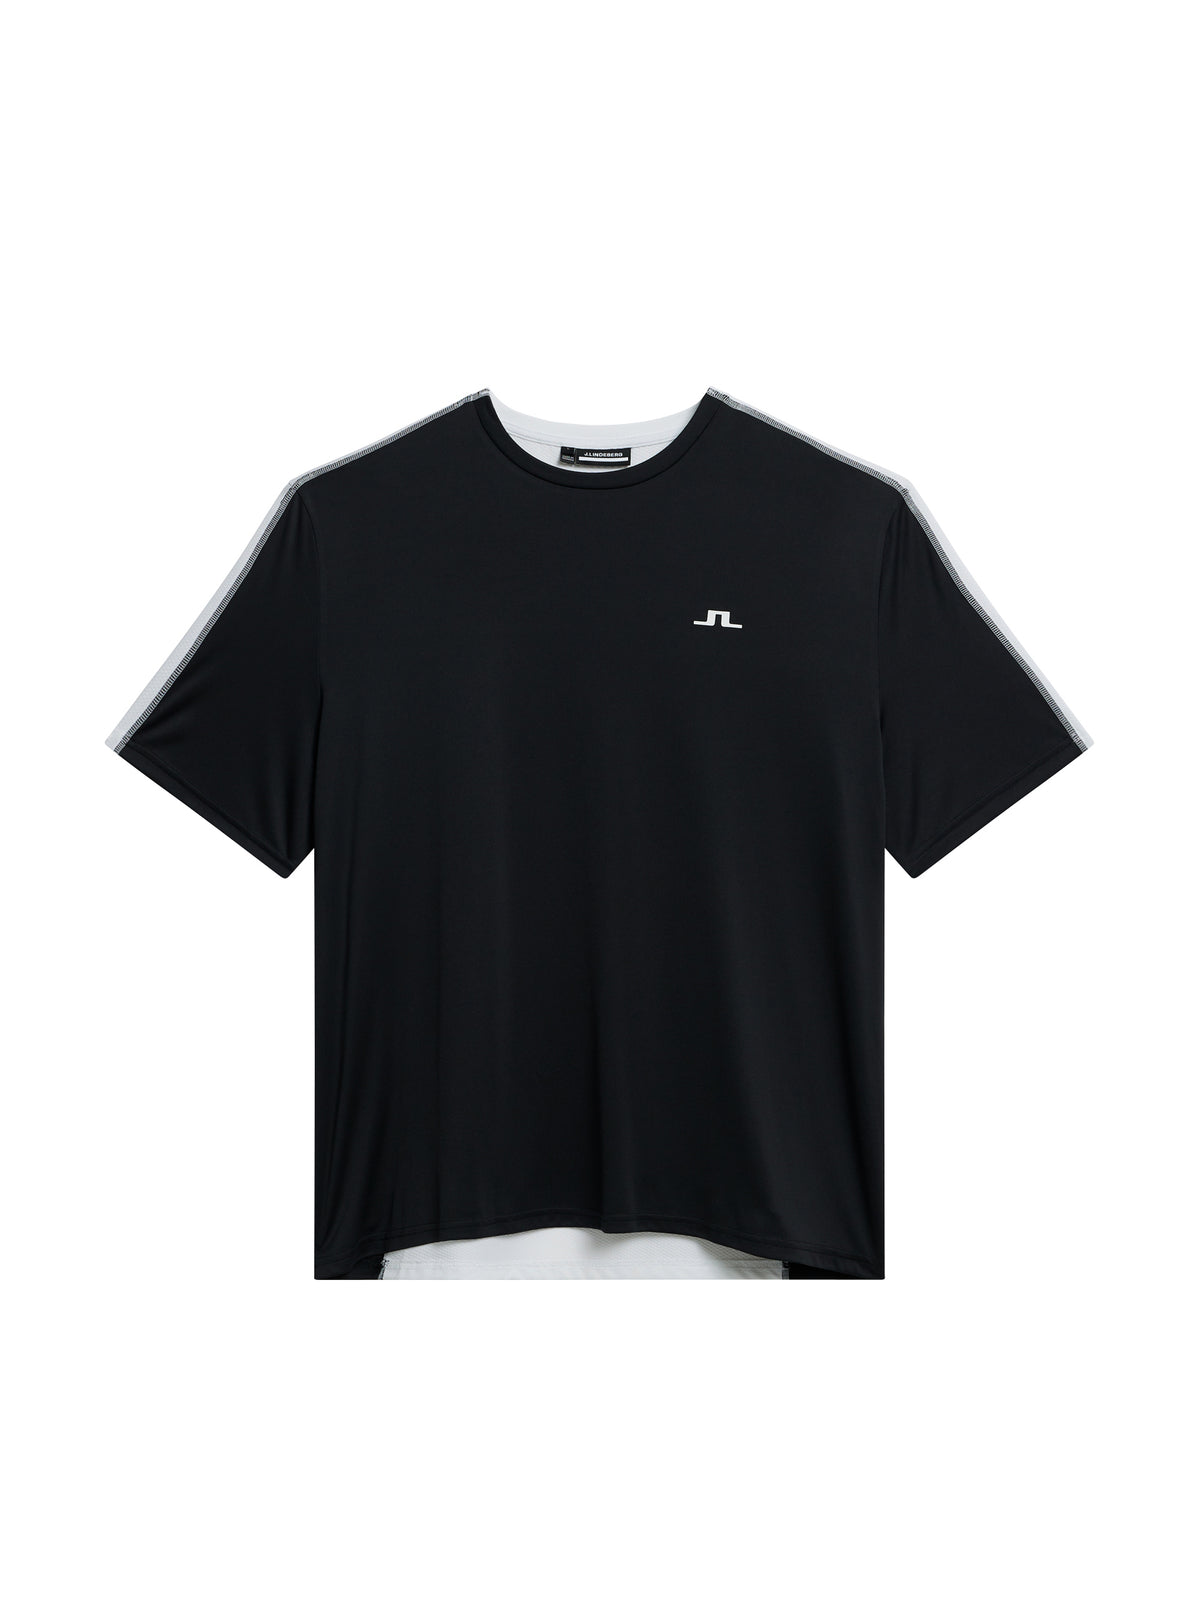 Ryder T-shirt / Black